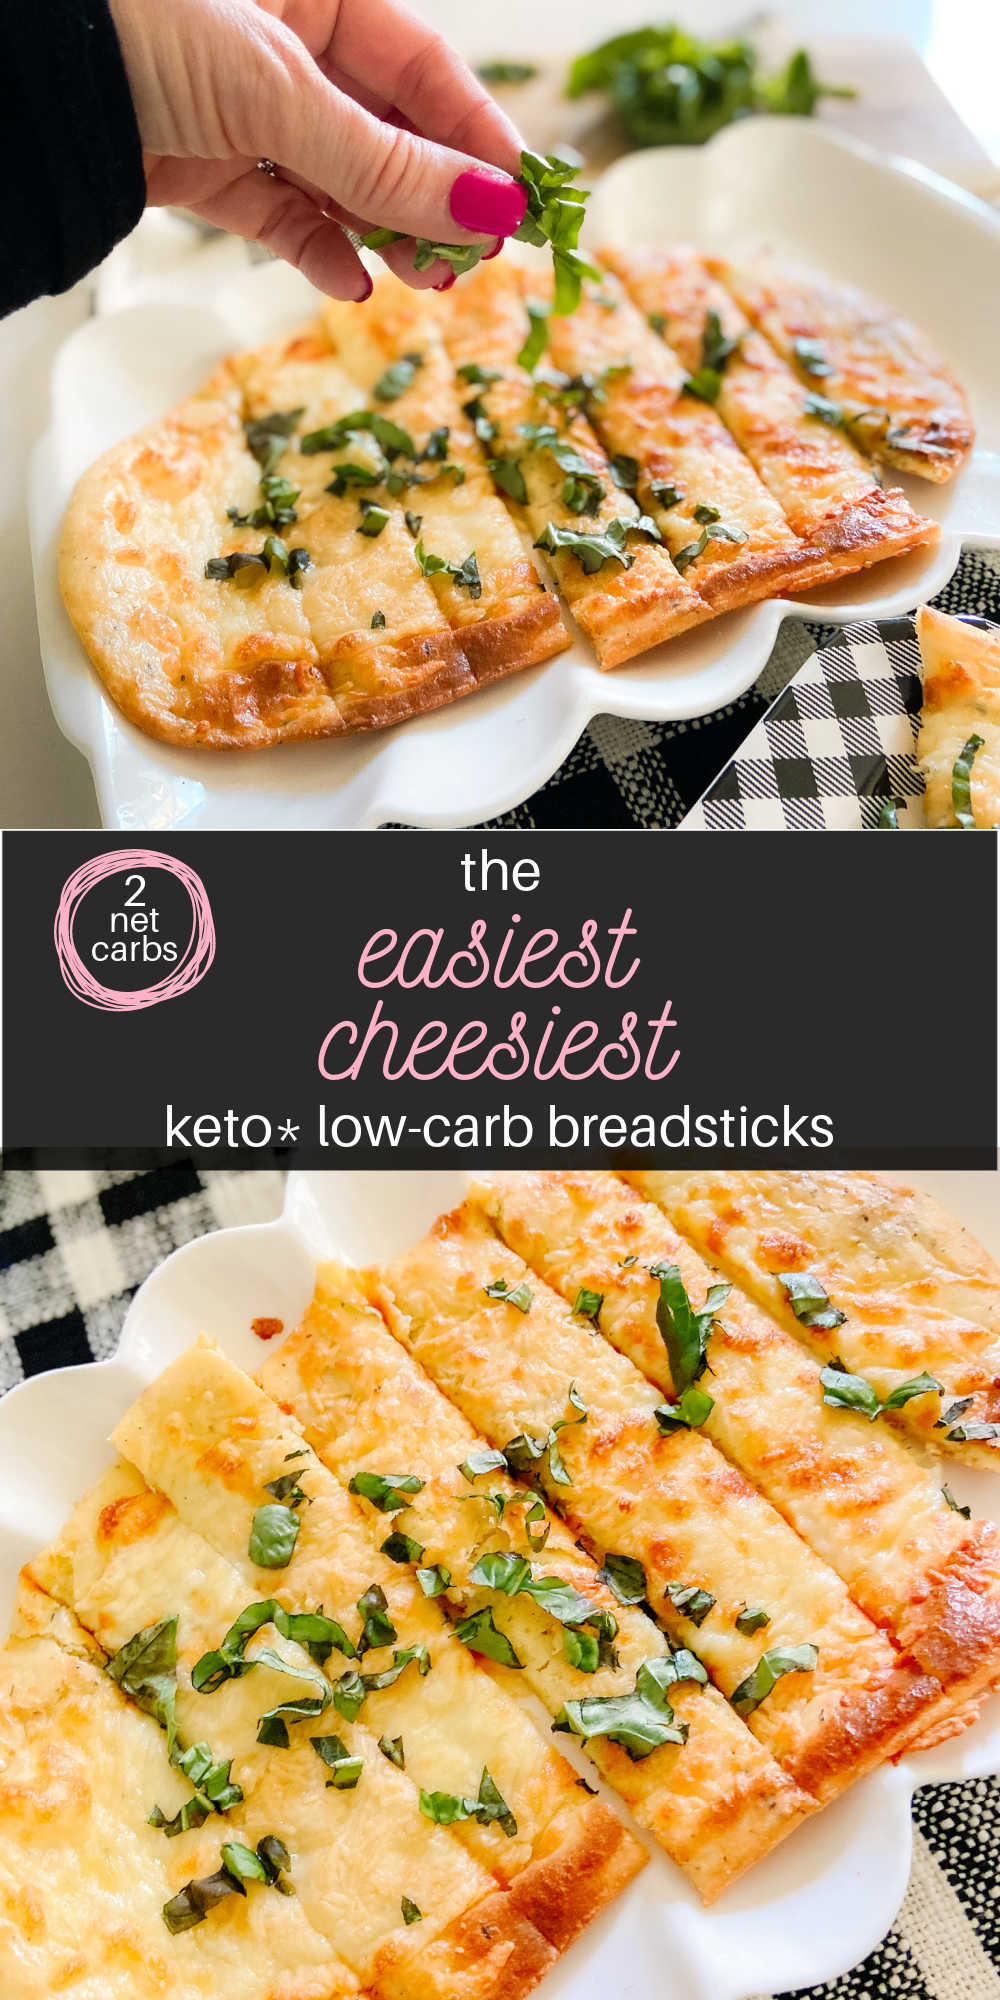 The easiest cheesiest keto low-carb breadsticks